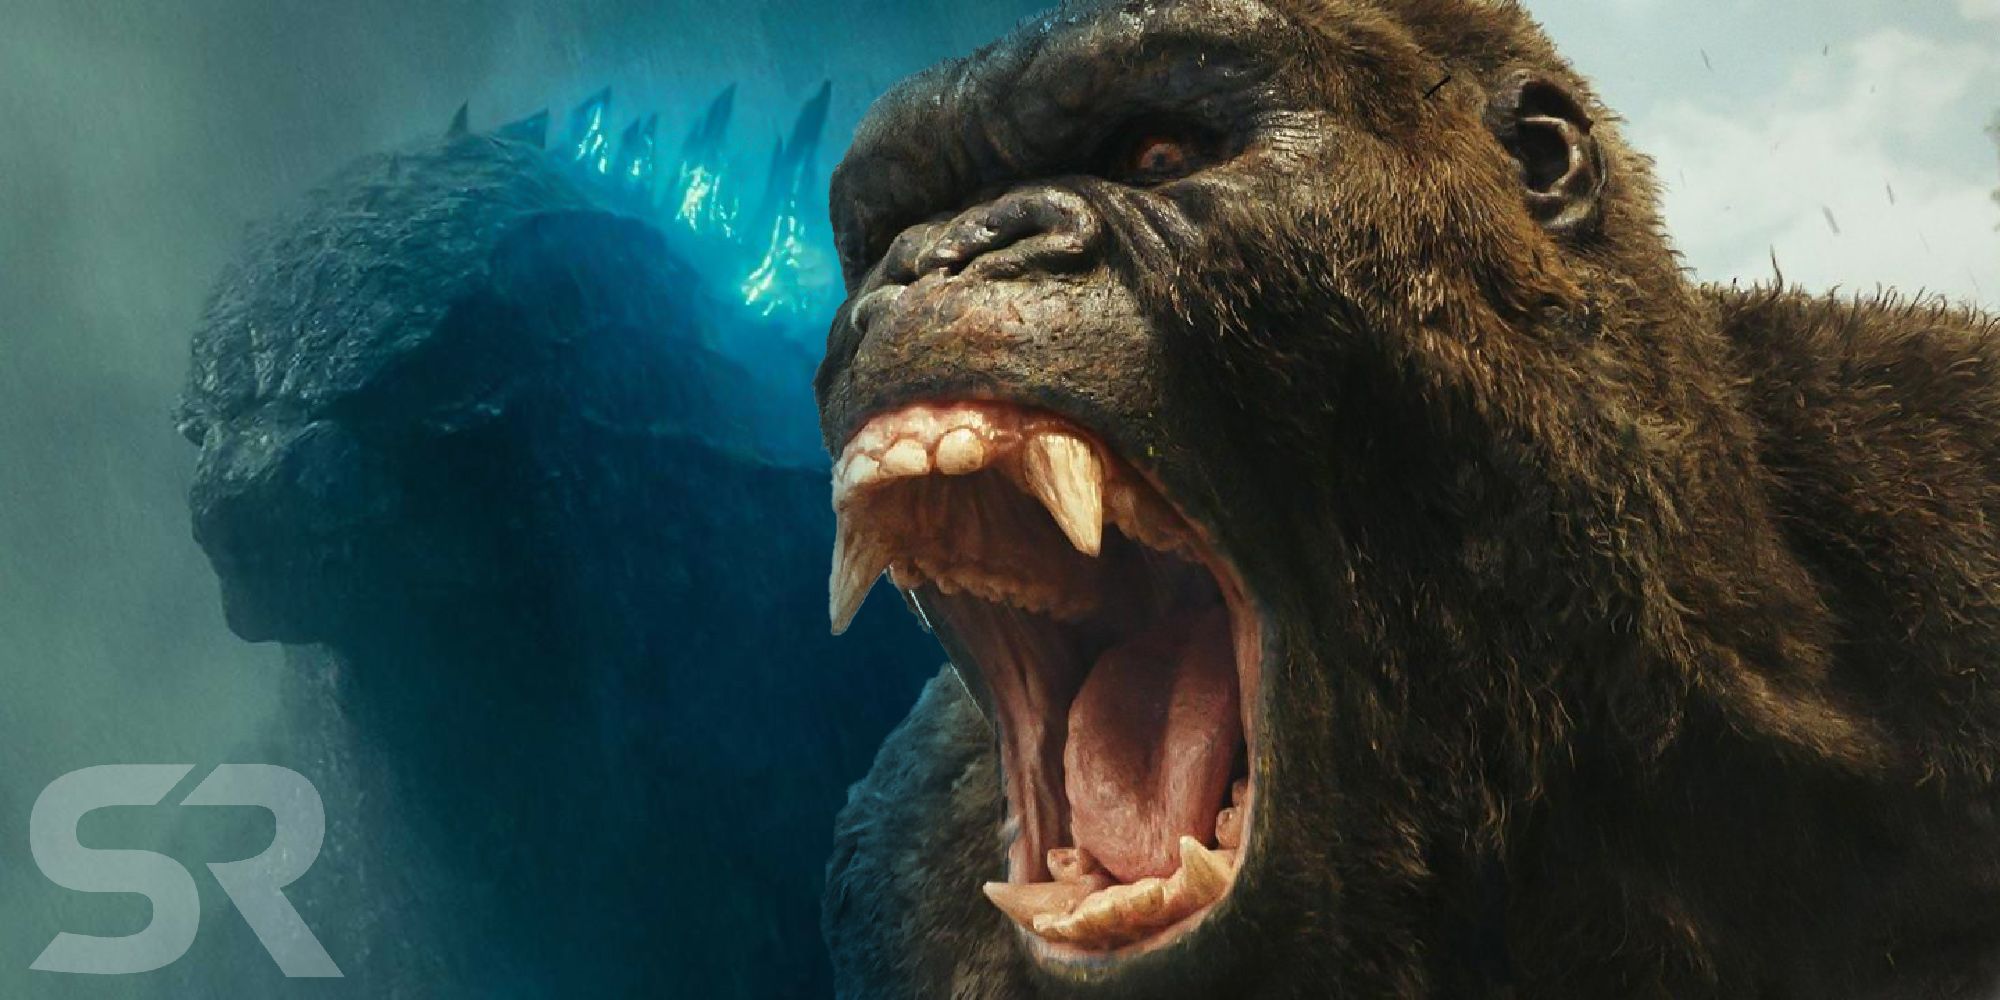 King Kong in Kong Skull Island and Godzilla in Godzilla king of Monsters